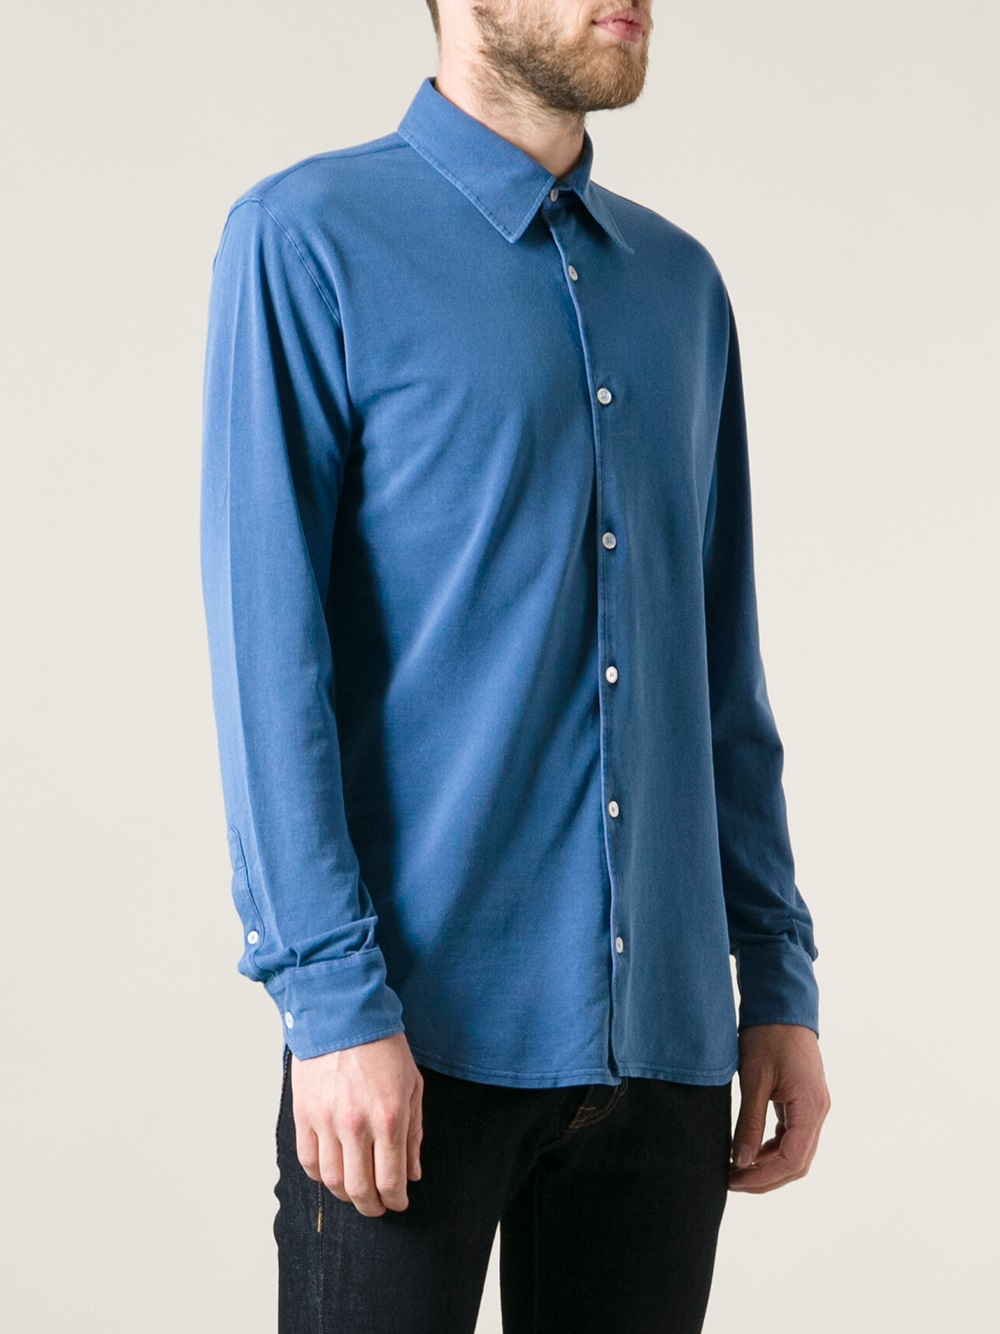 Fedeli Long Sleeve Polo Shirt in Blue for Men - Lyst